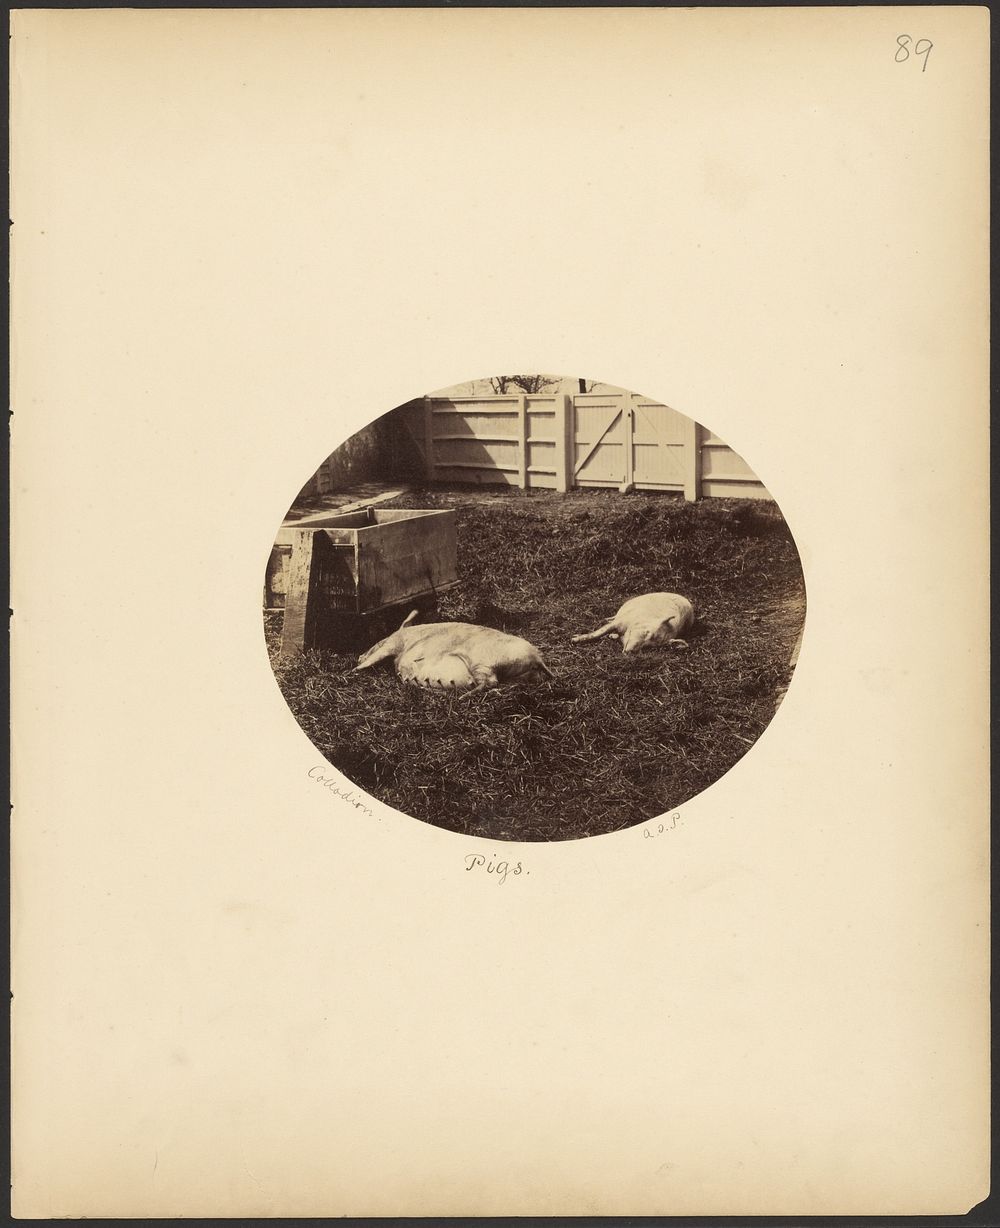 Pigs by Arthur Julius Pollock